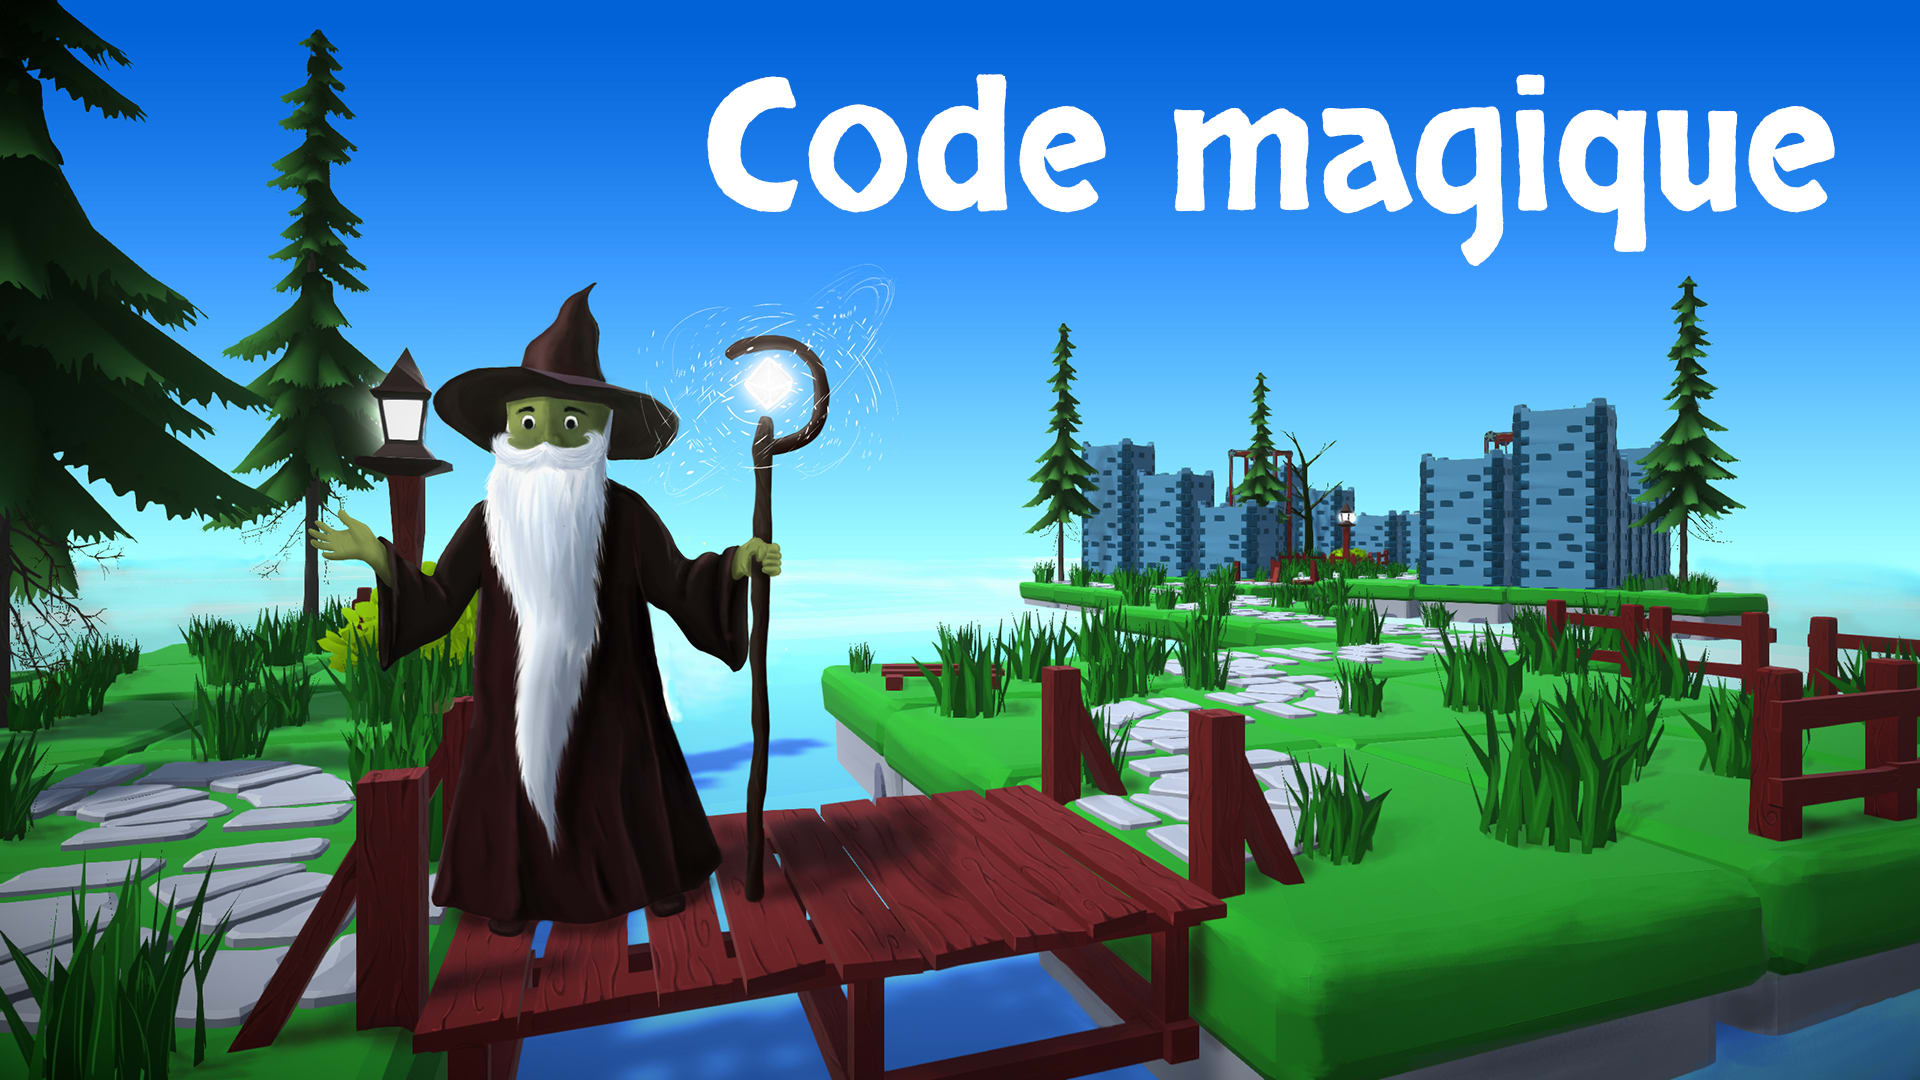 Magic code 1